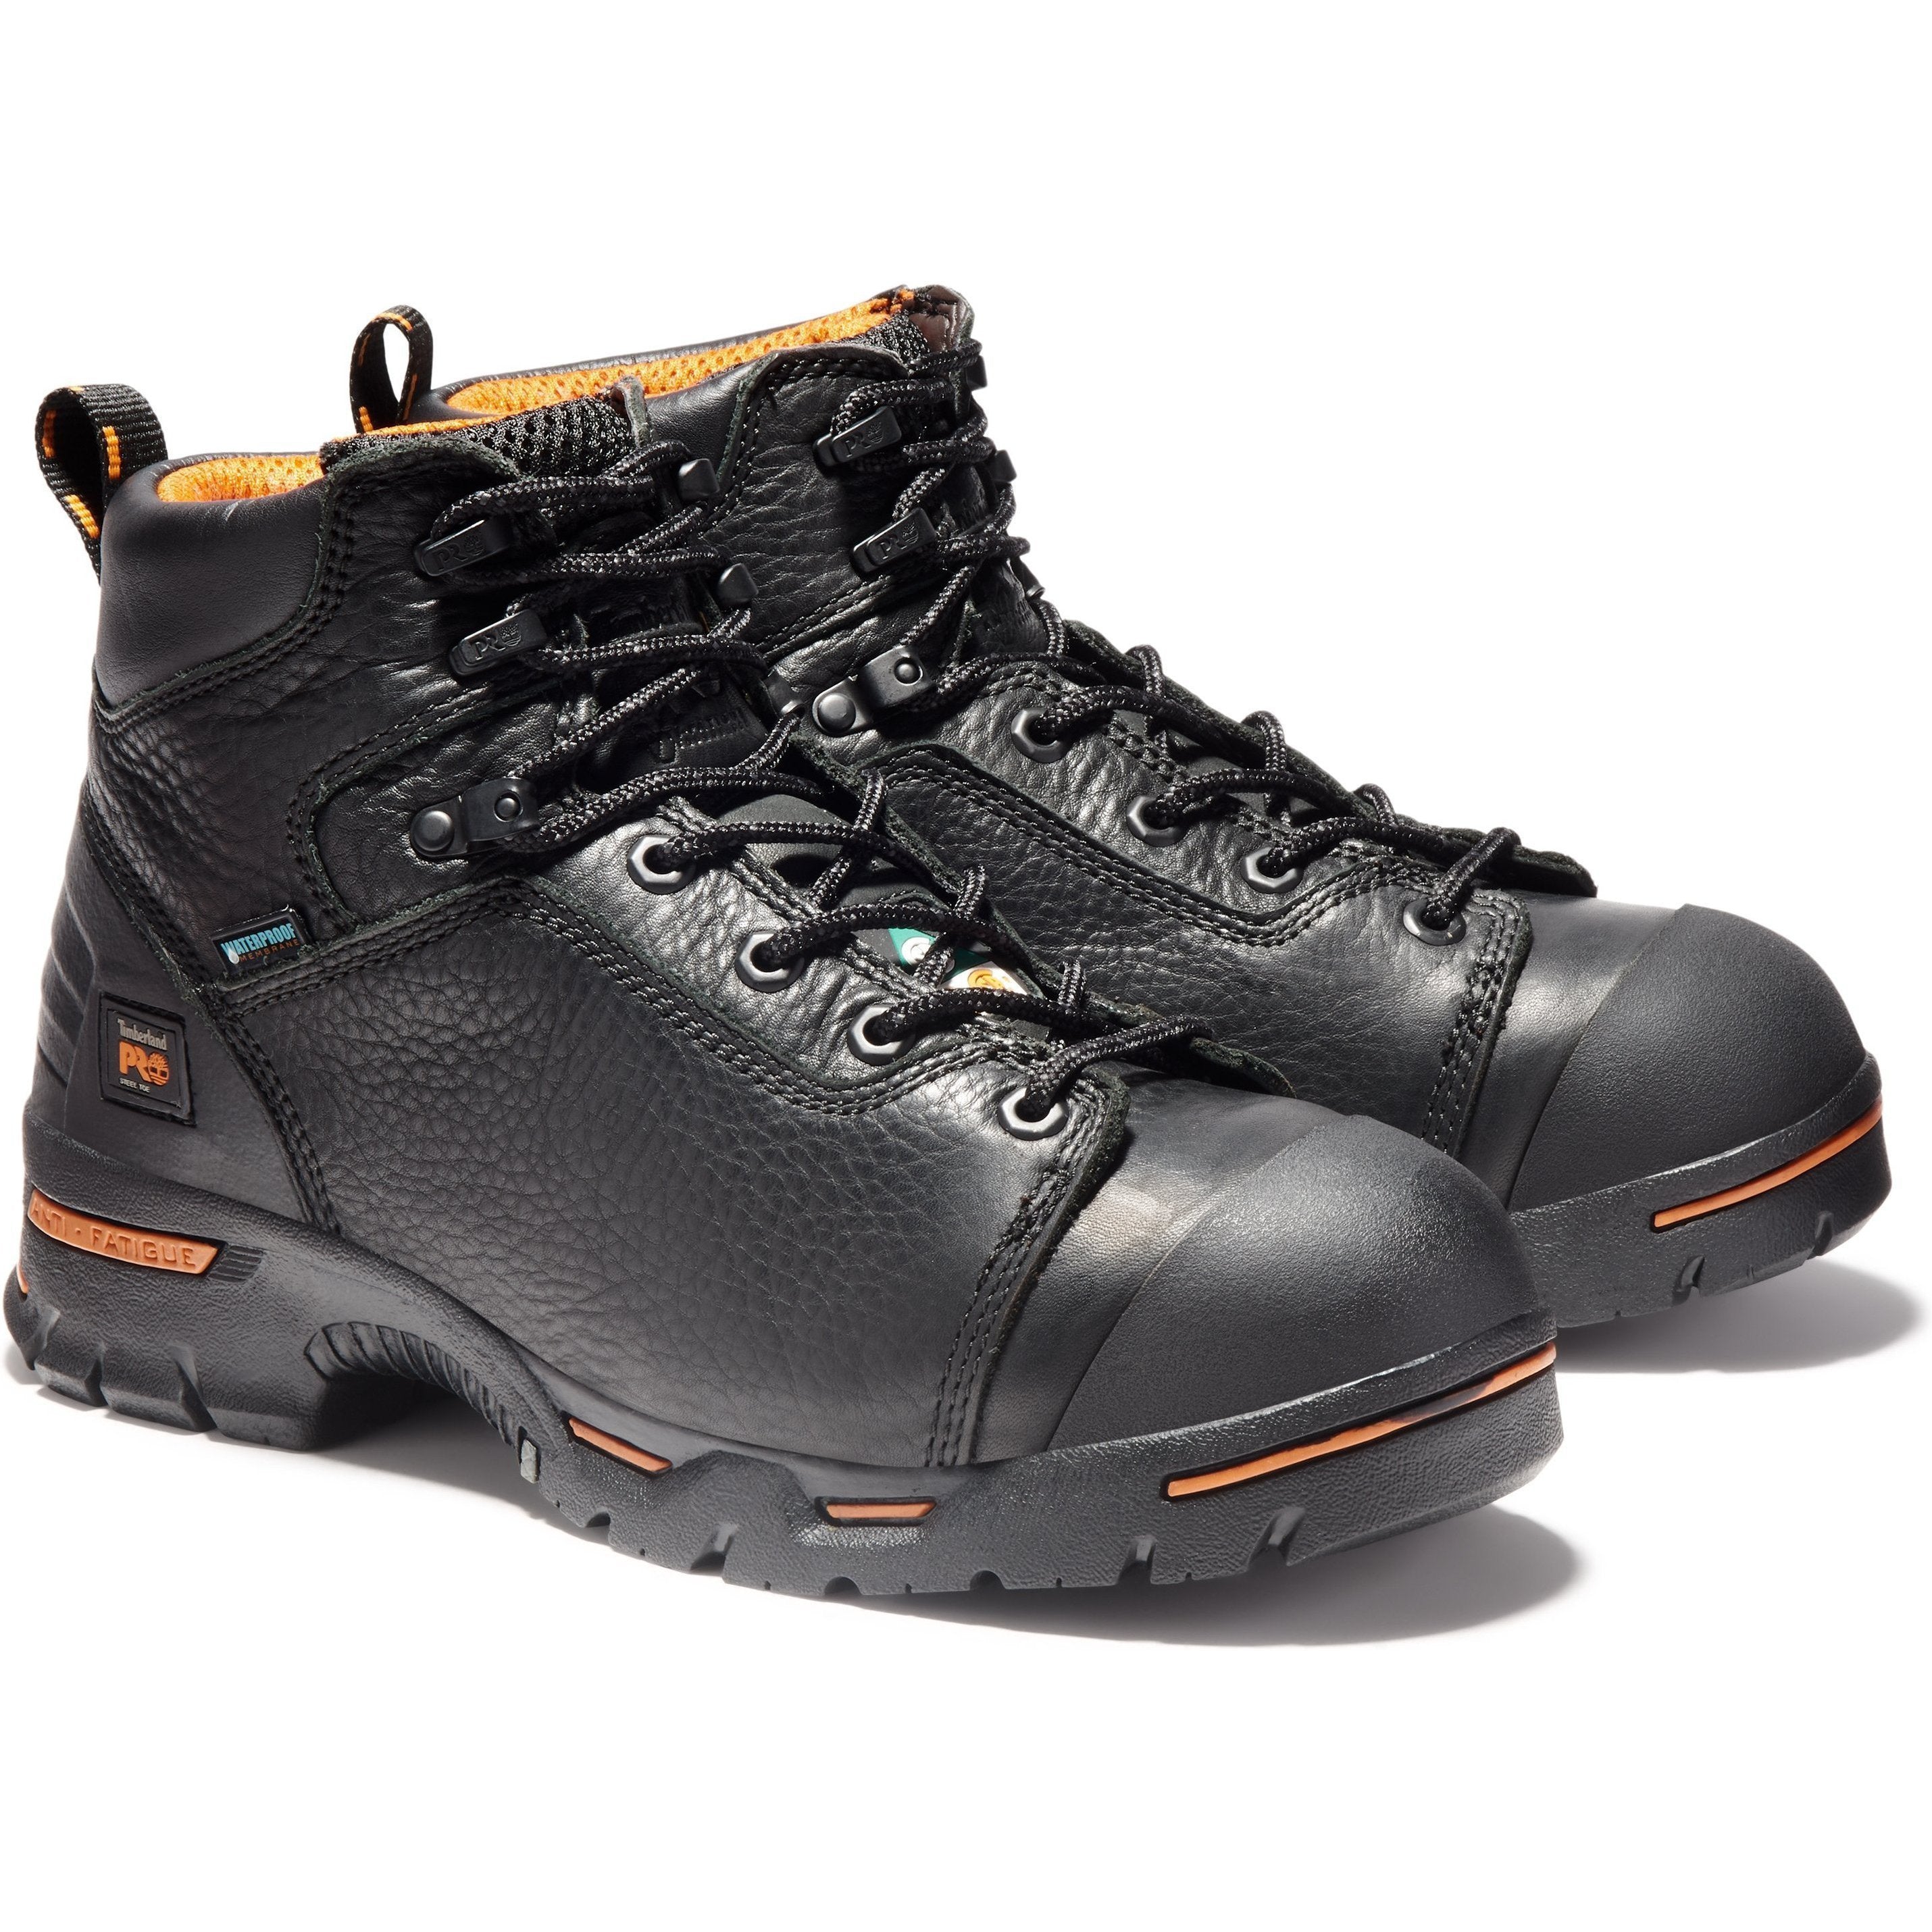 Timberland PRO Men's Endurance 6" Steel Toe WP Work Boot - TB147592001 7 / Medium / Black - Overlook Boots